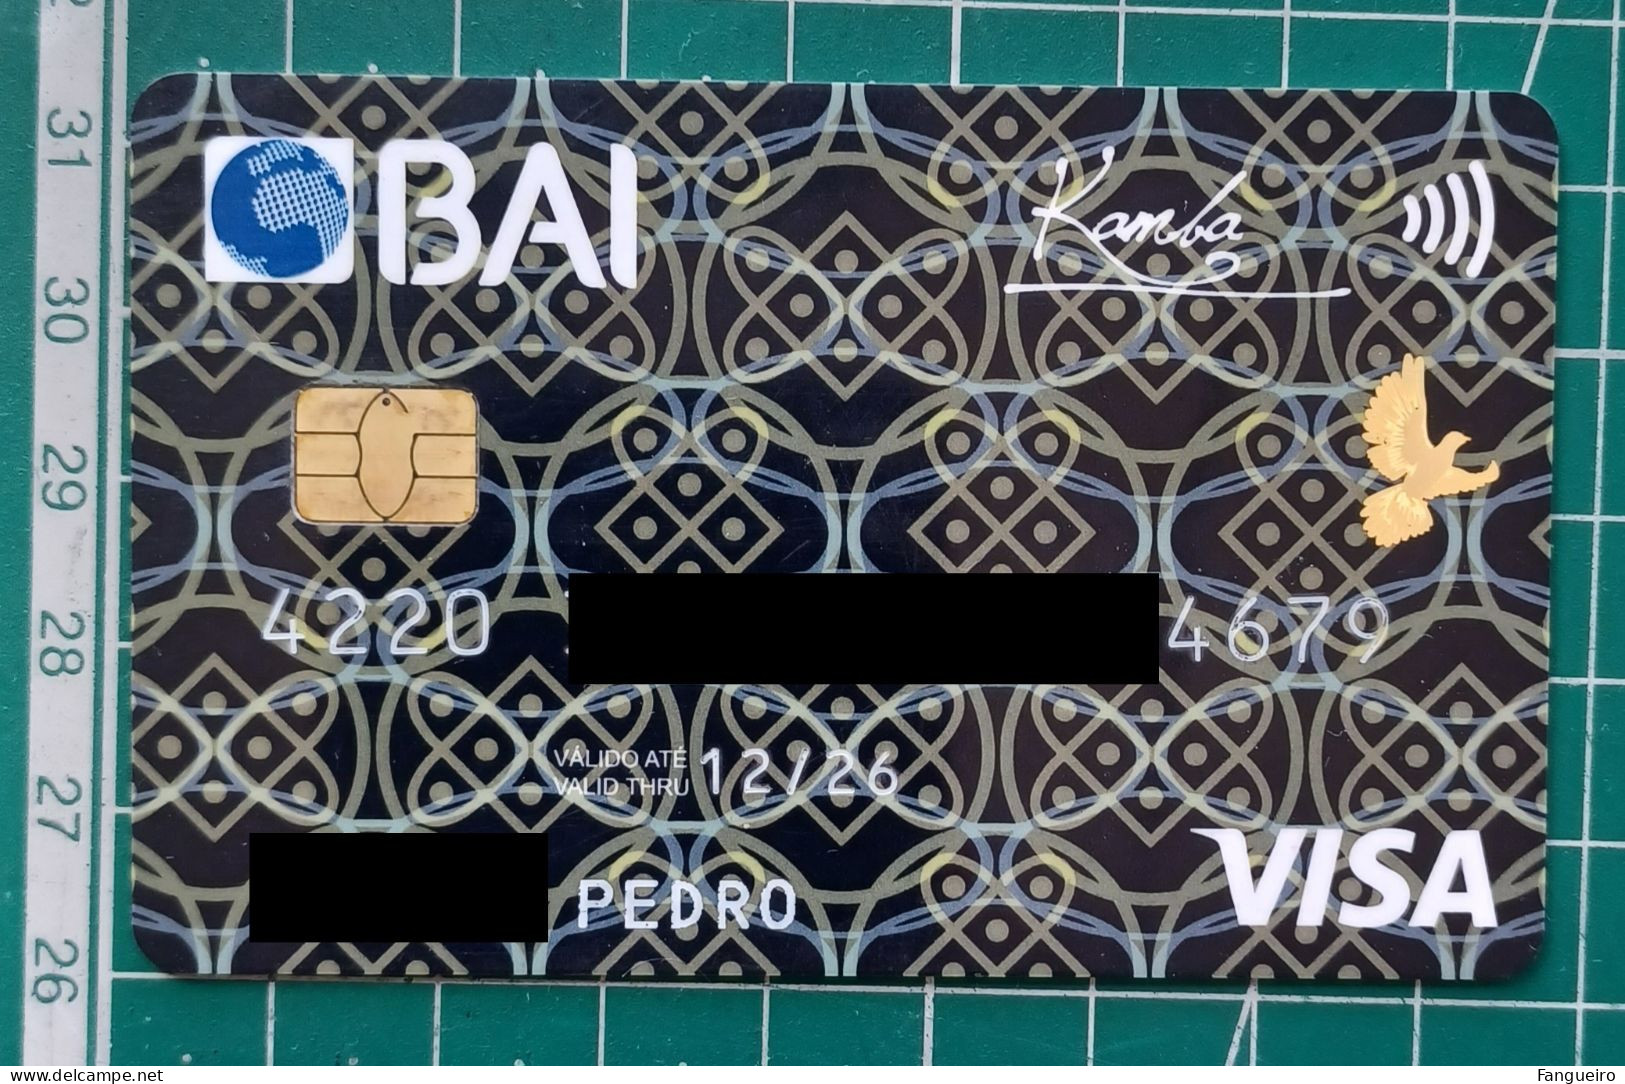 ANGOLA CREDIT CARD BAI - Krediet Kaarten (vervaldatum Min. 10 Jaar)